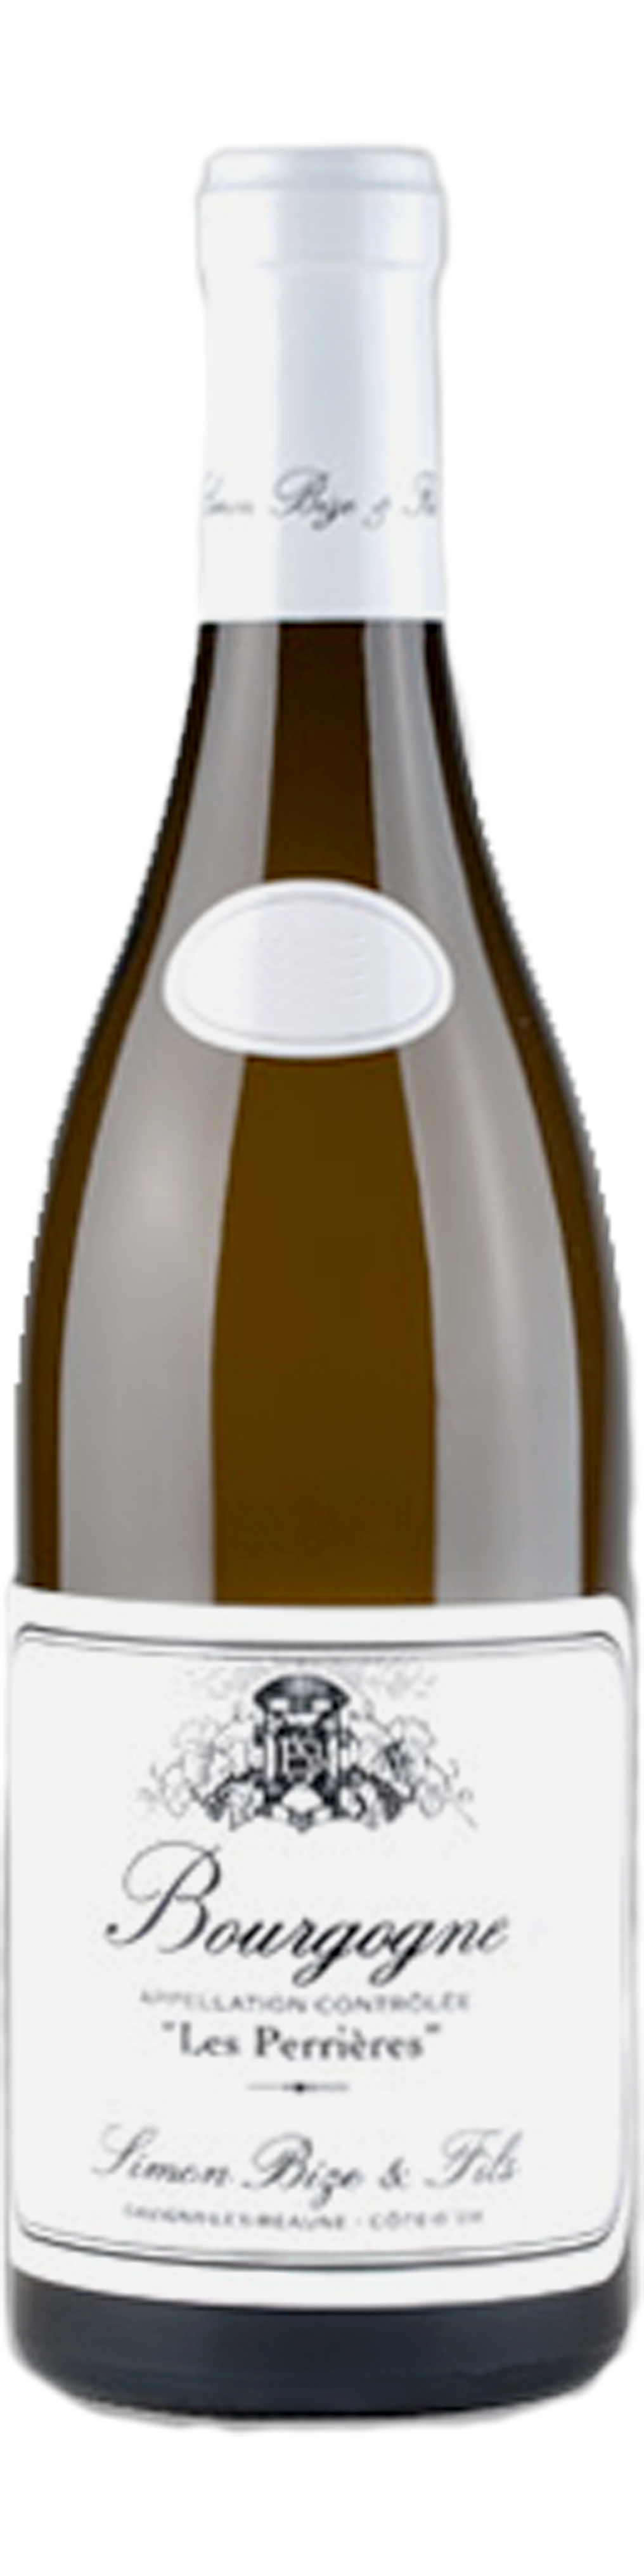 Bottle shot of 2011 Bourgogne Blanc Les Perrières